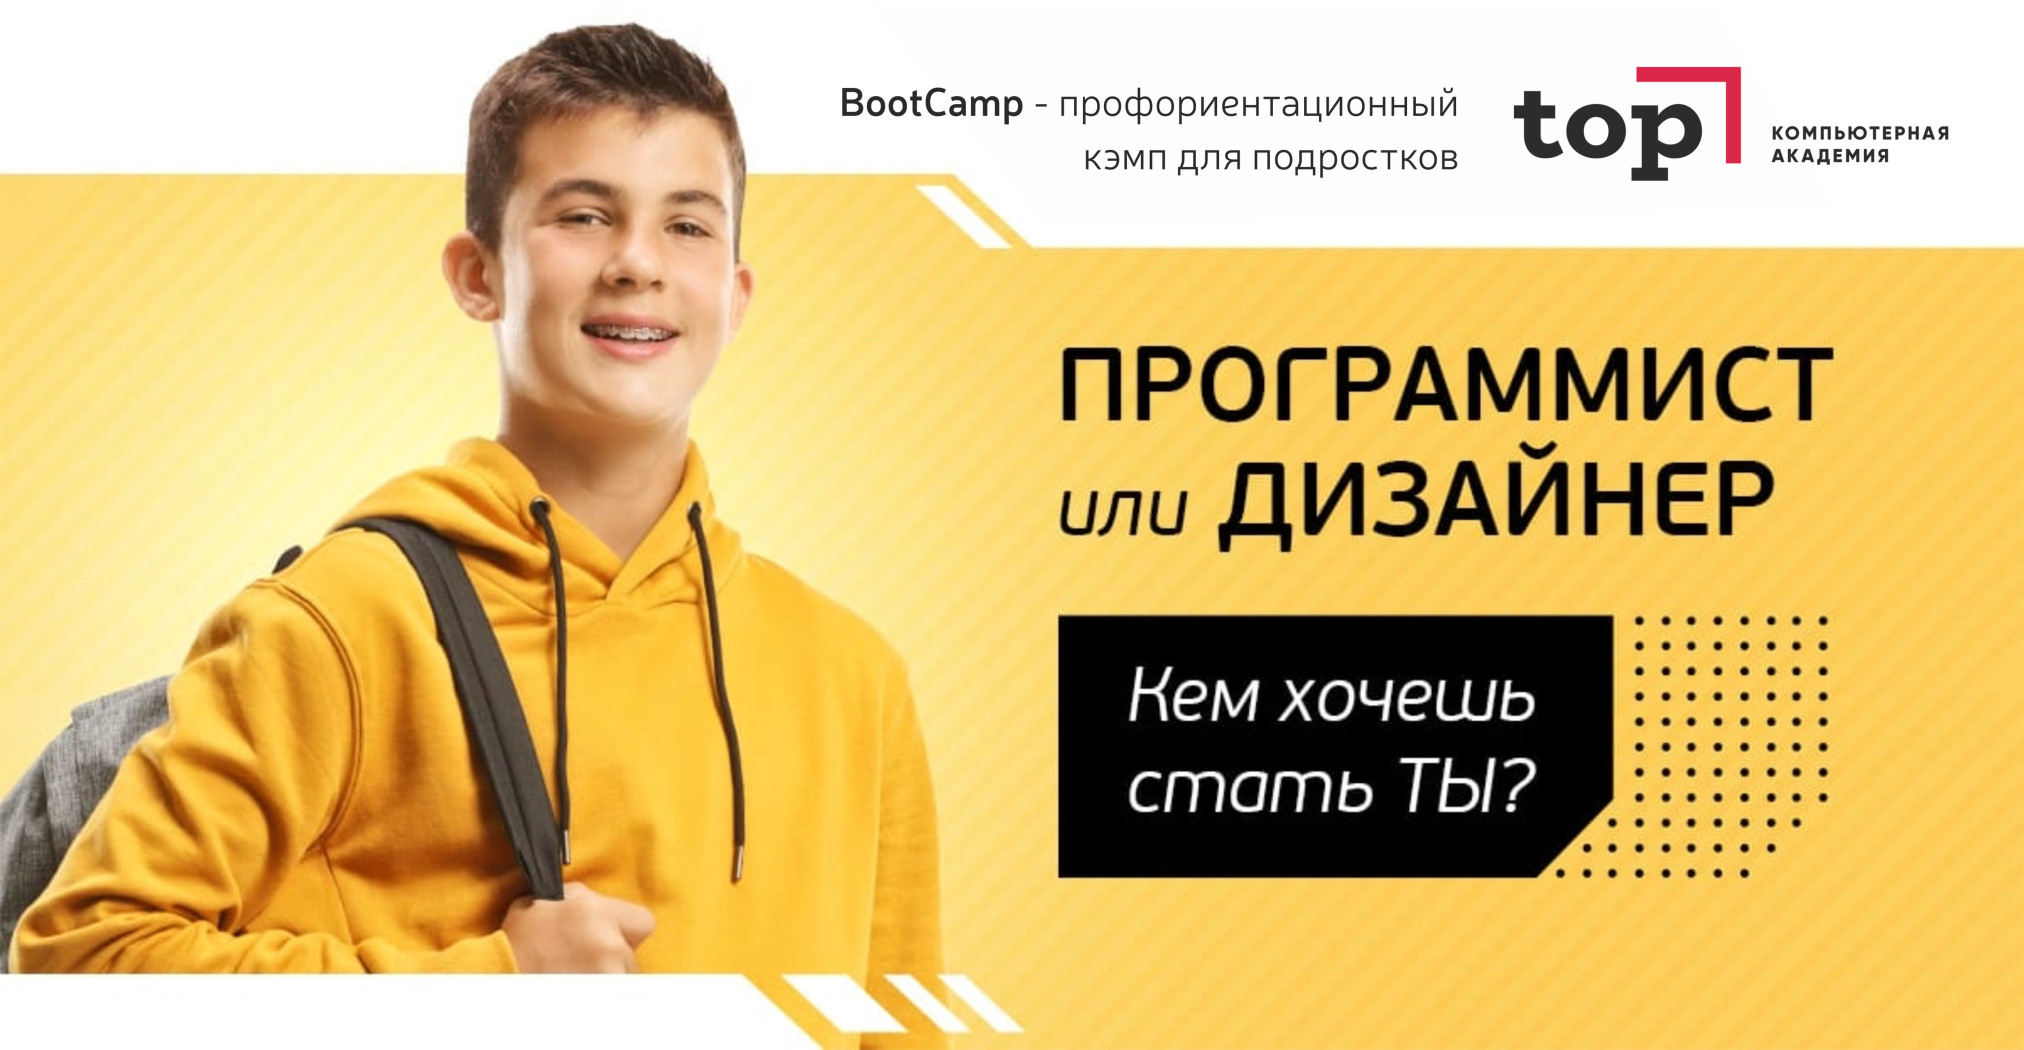 bootcamp2_boy.jpeg